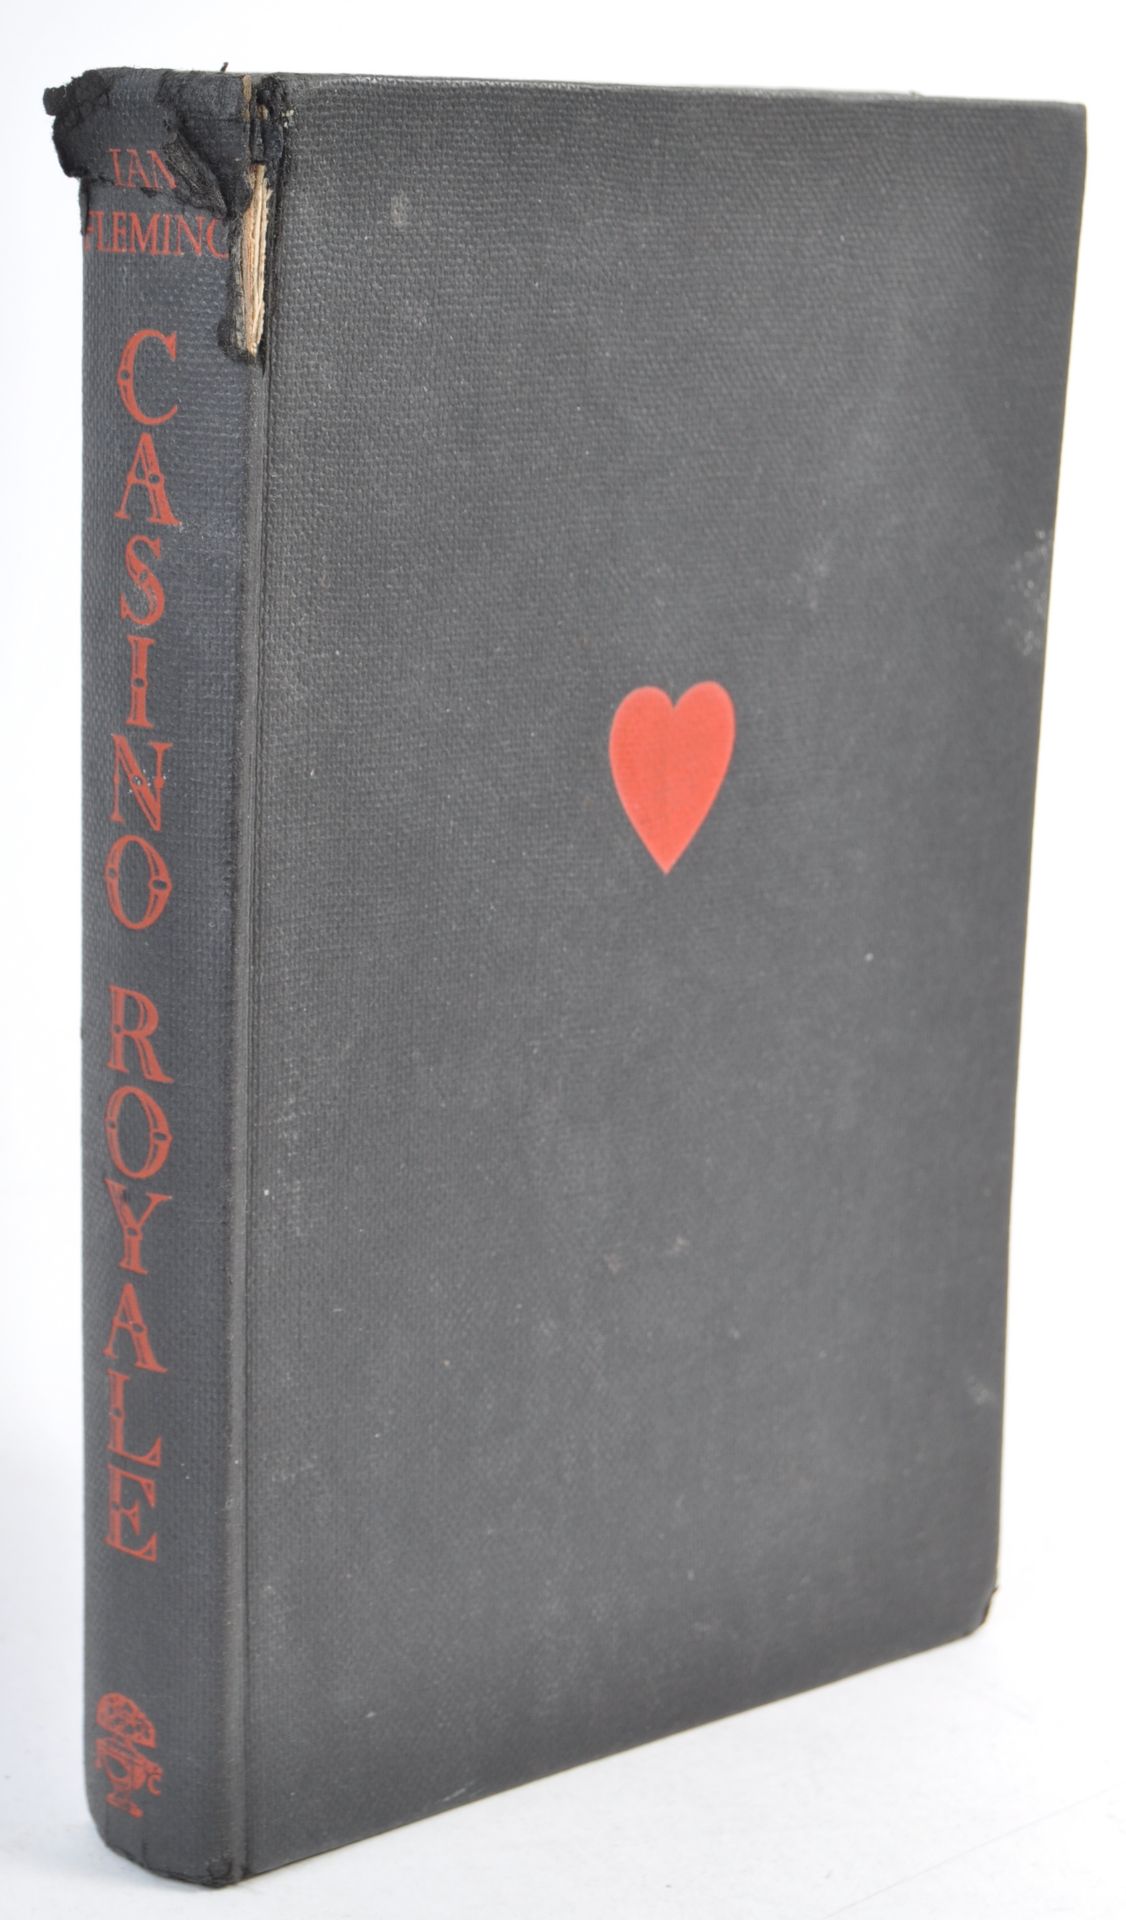 JAMES BOND - IAN FLEMING - CASINO ROYALE - FIRST EDITION BOOK